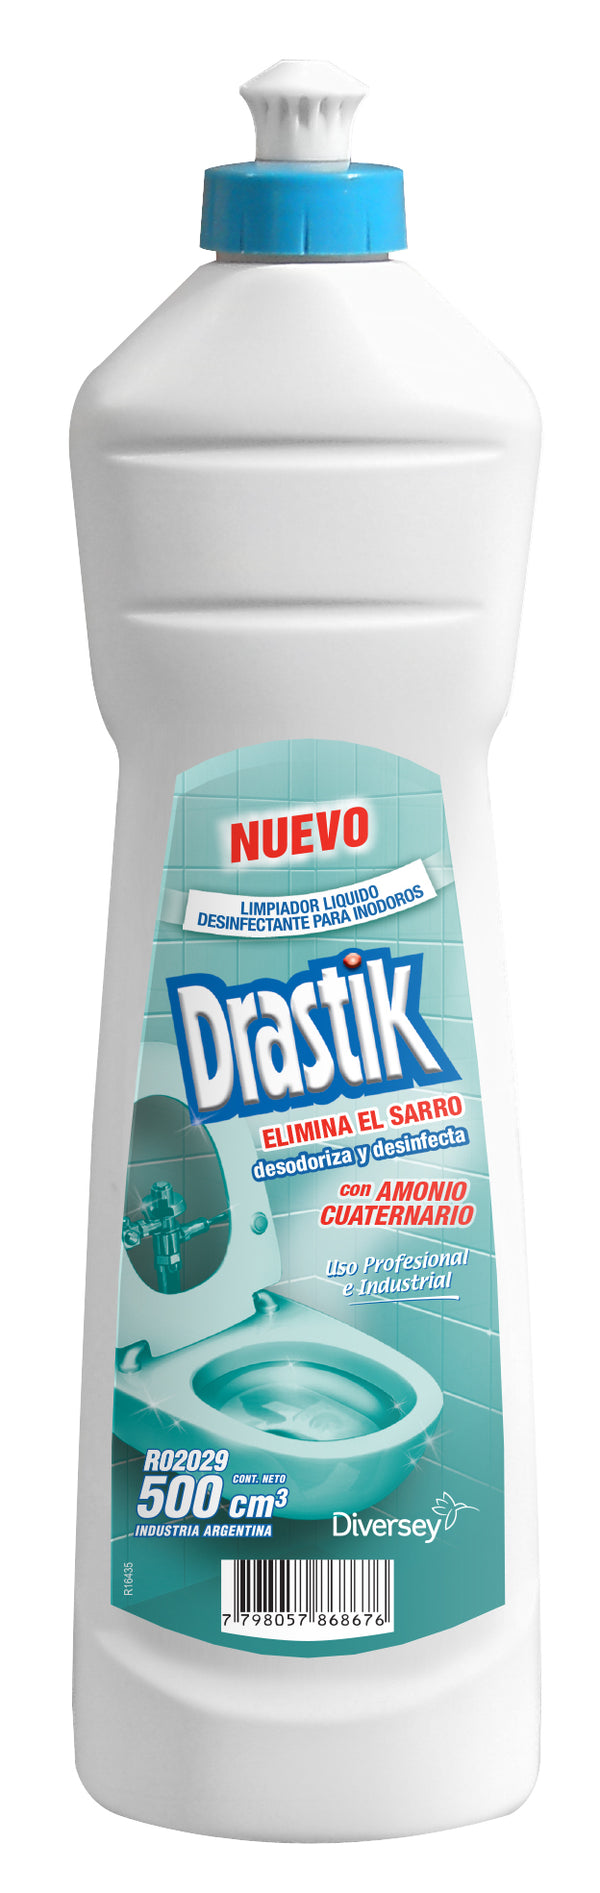 Drastik Bathroom Cleaner - ( 500 Cc )